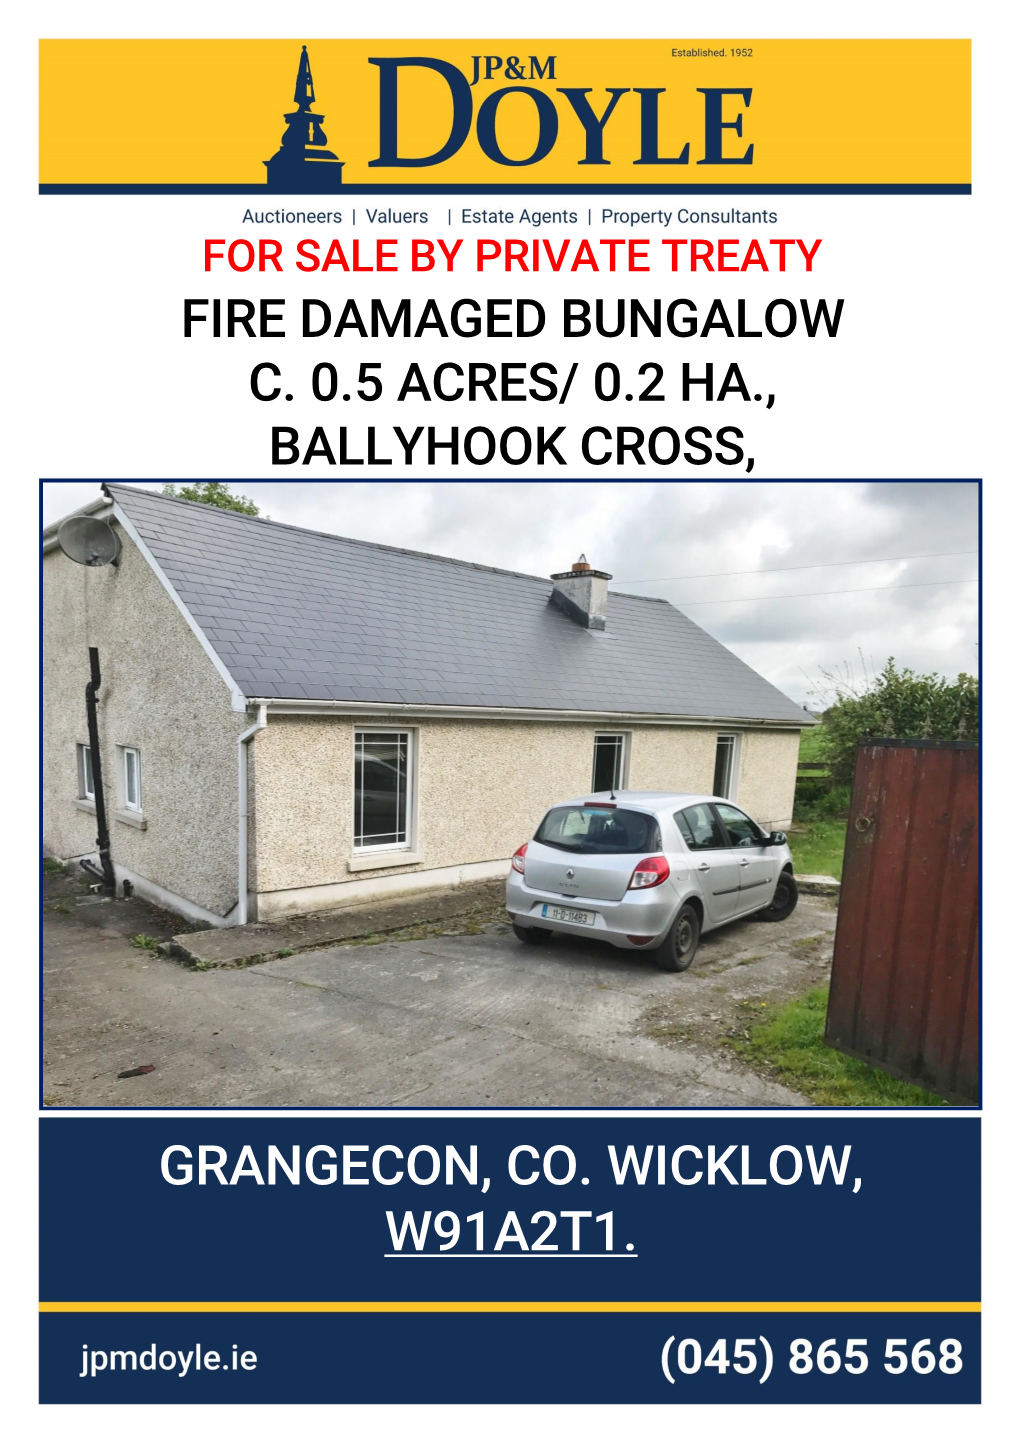 Grangecon, Co. Wicklow, W91a2t1